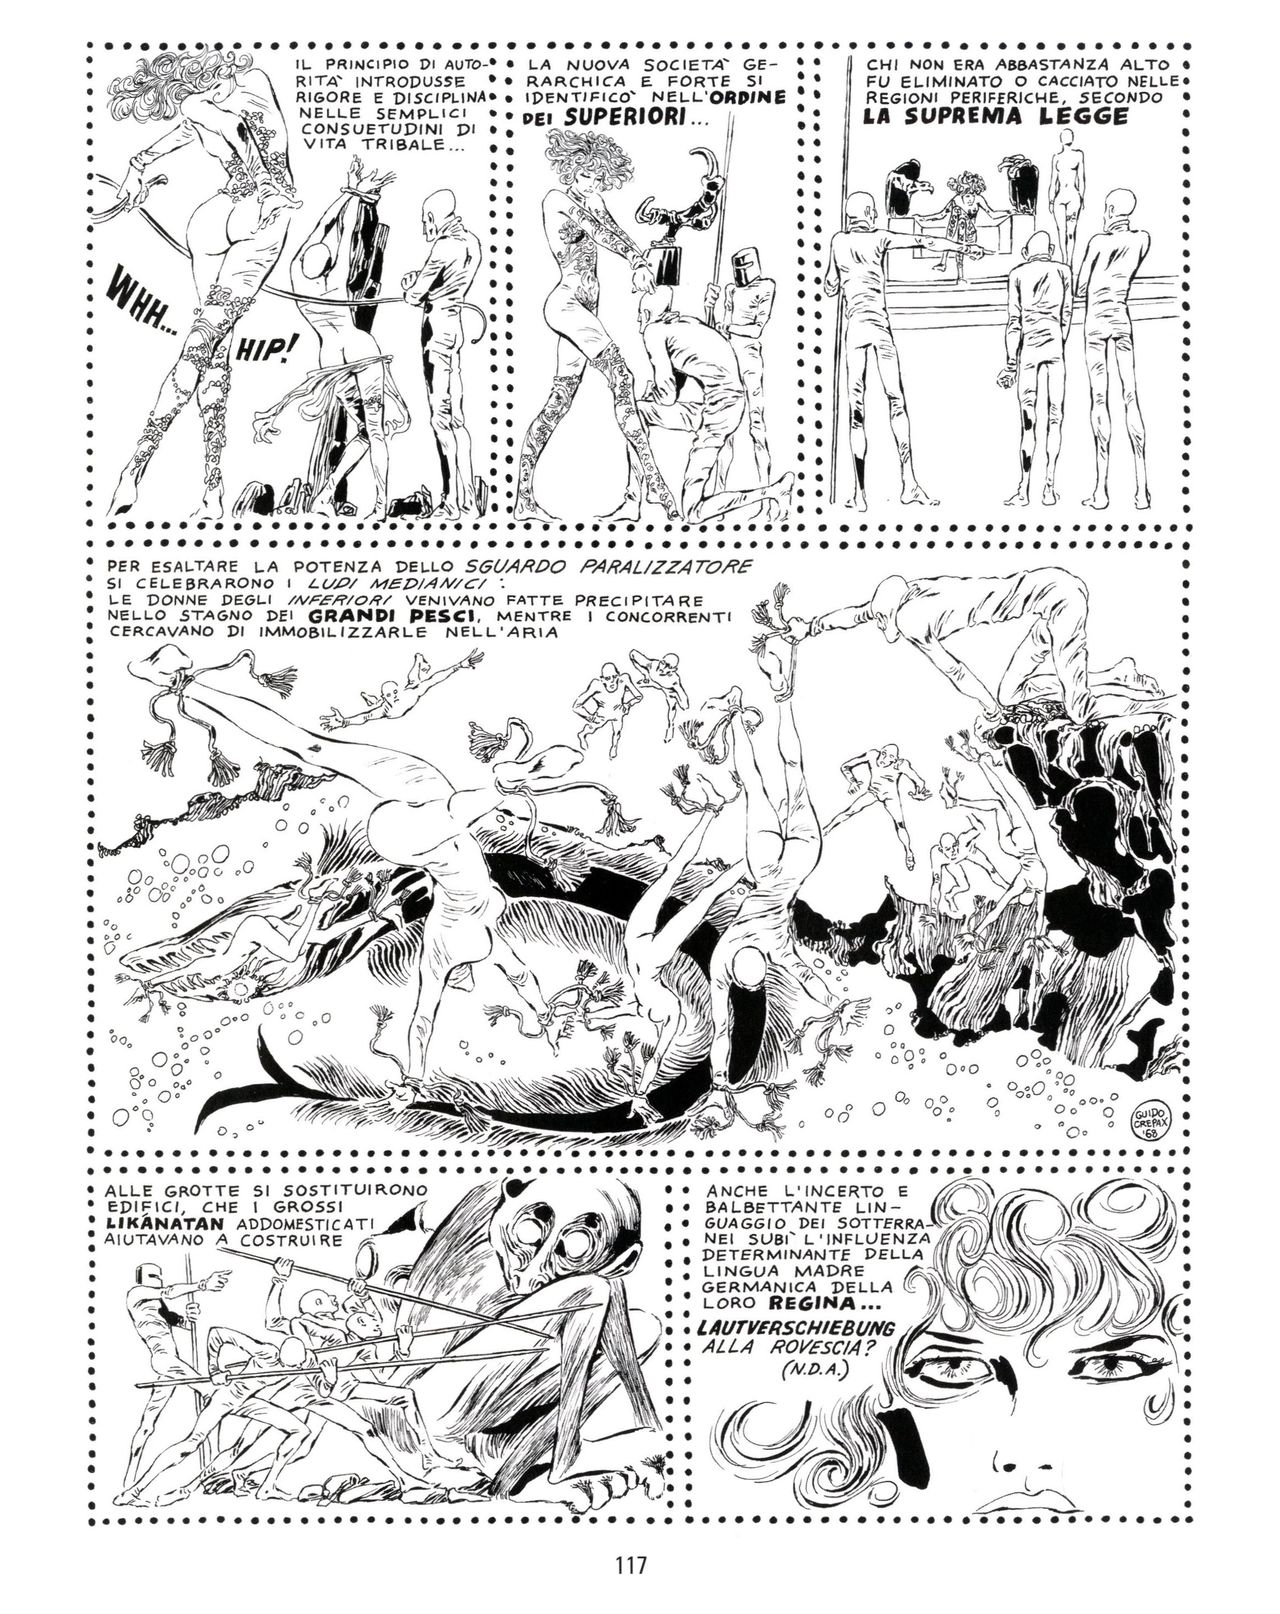 [Guido Crepax] Erotica Fumetti #25 : L'ascesa dei sotterranei : I cavalieri ciechi [Italian] 118